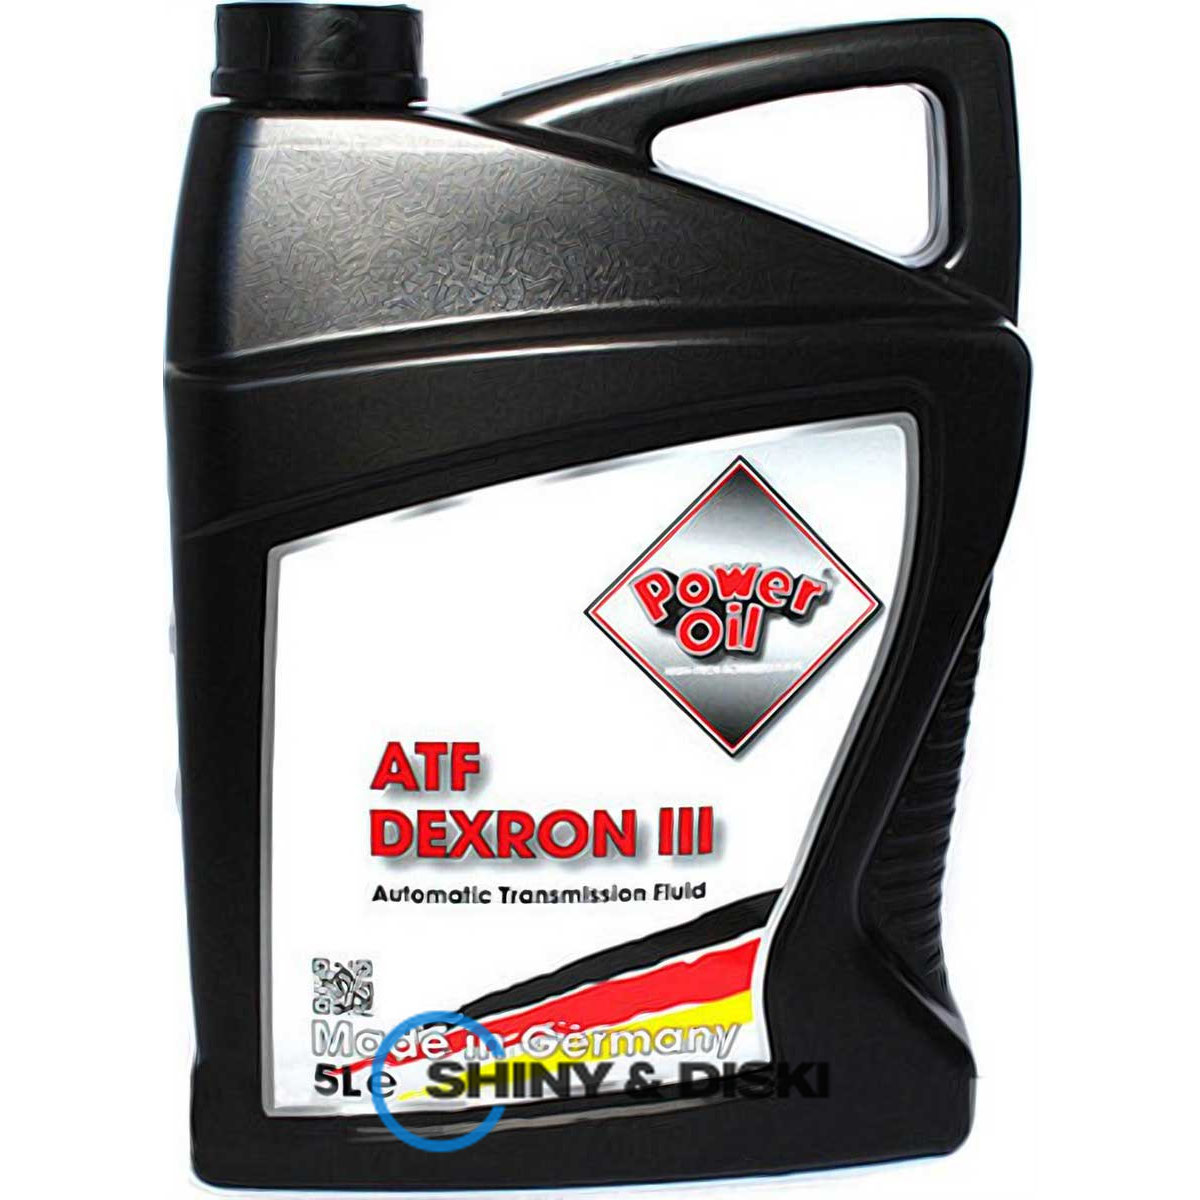 power oil atf dexron iii -red- (5л)